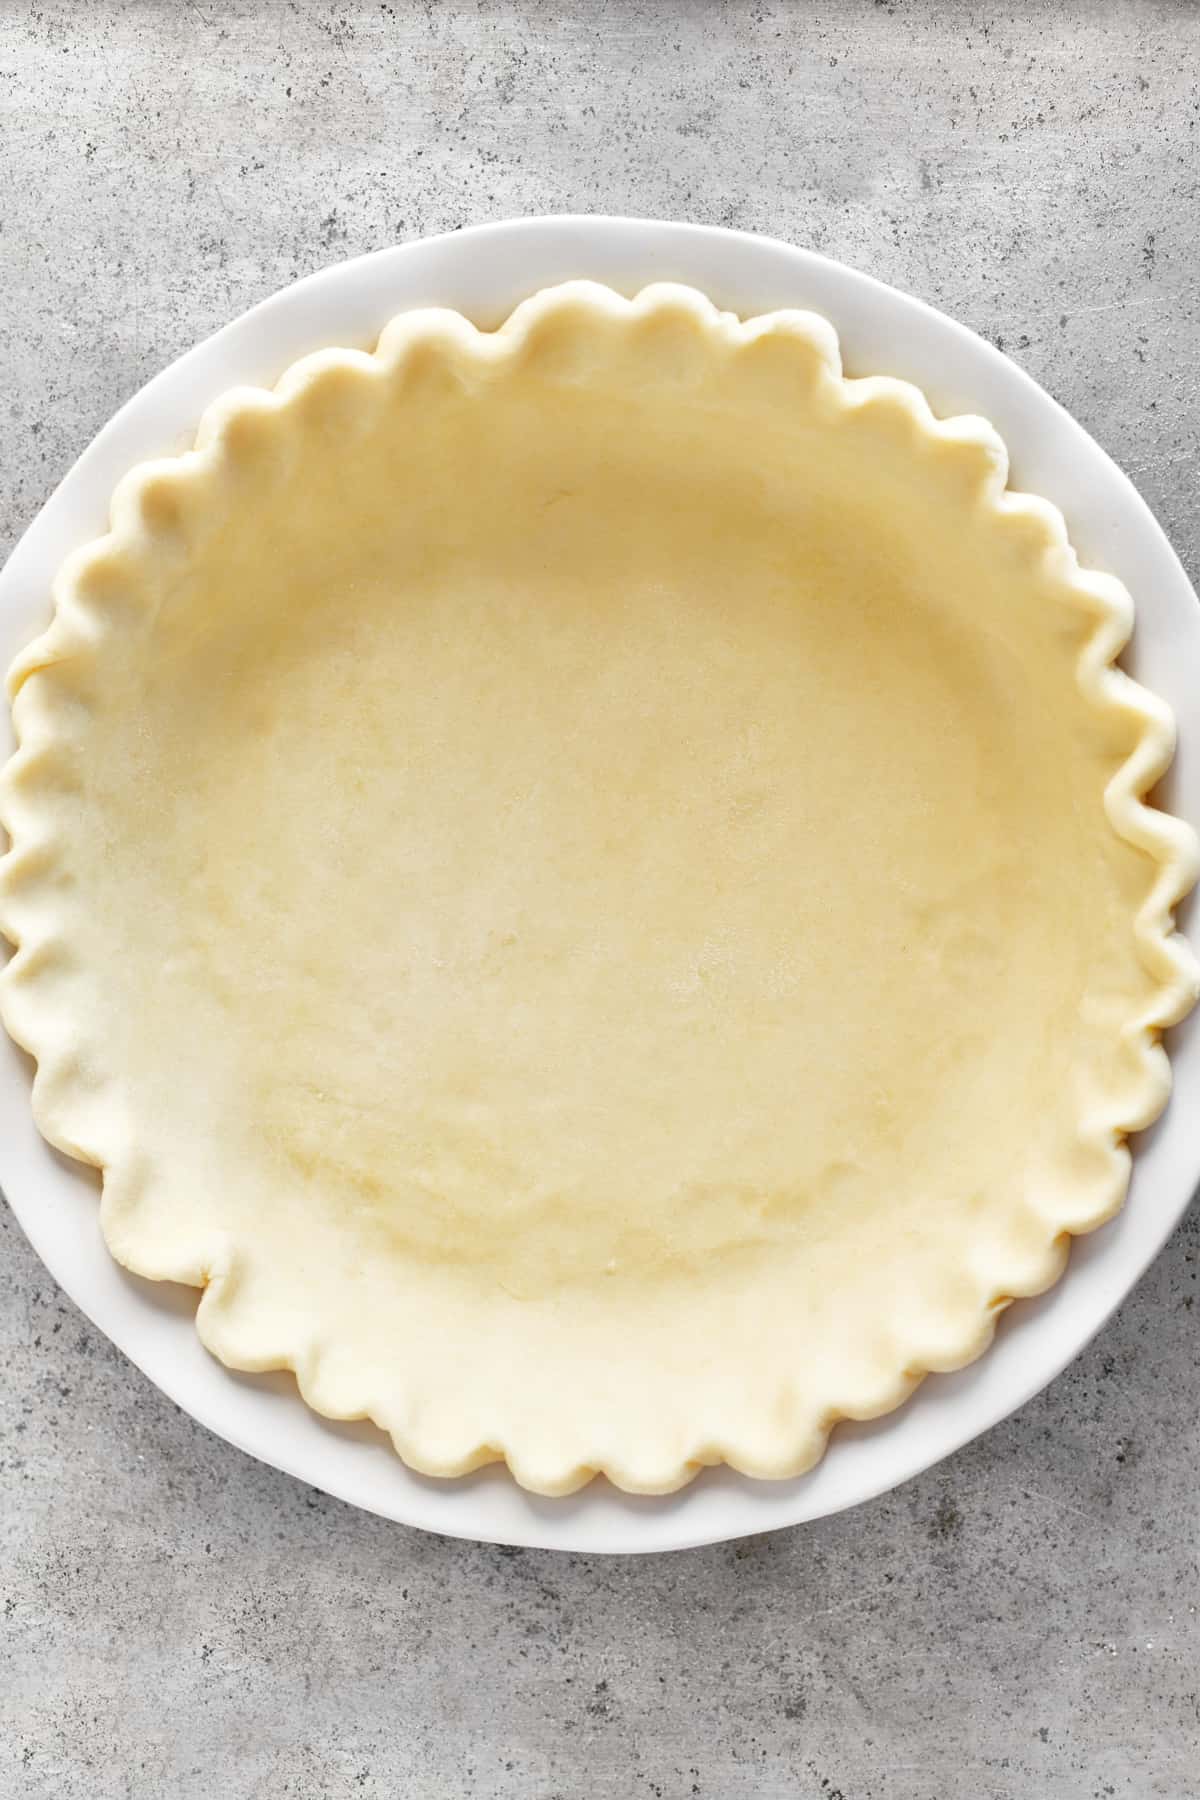 unbaked pie crust in white ceramic pie plate